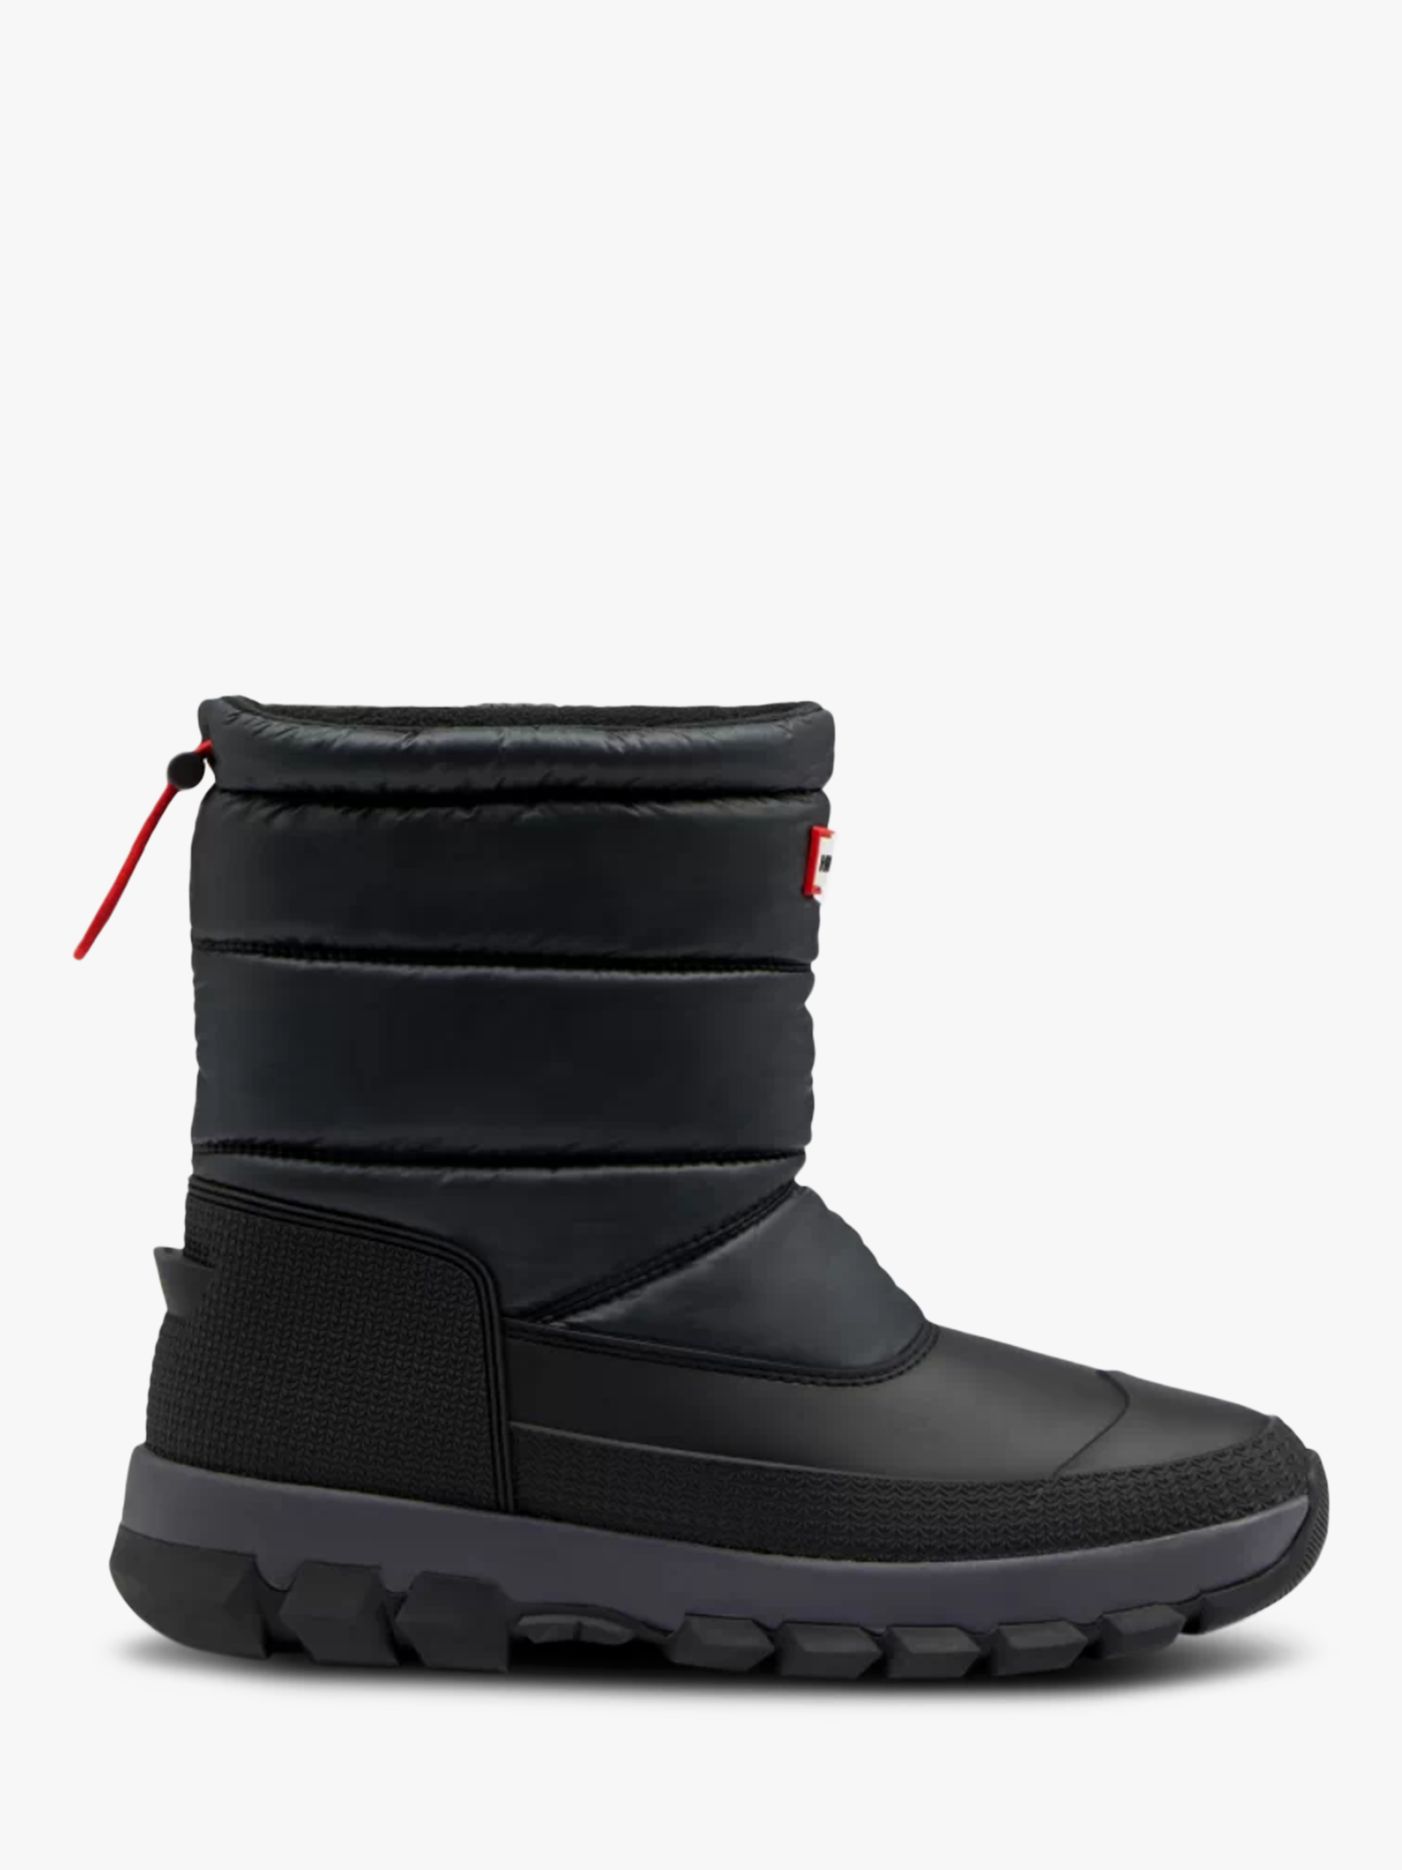 Hunter Men's Snow Boots, Black